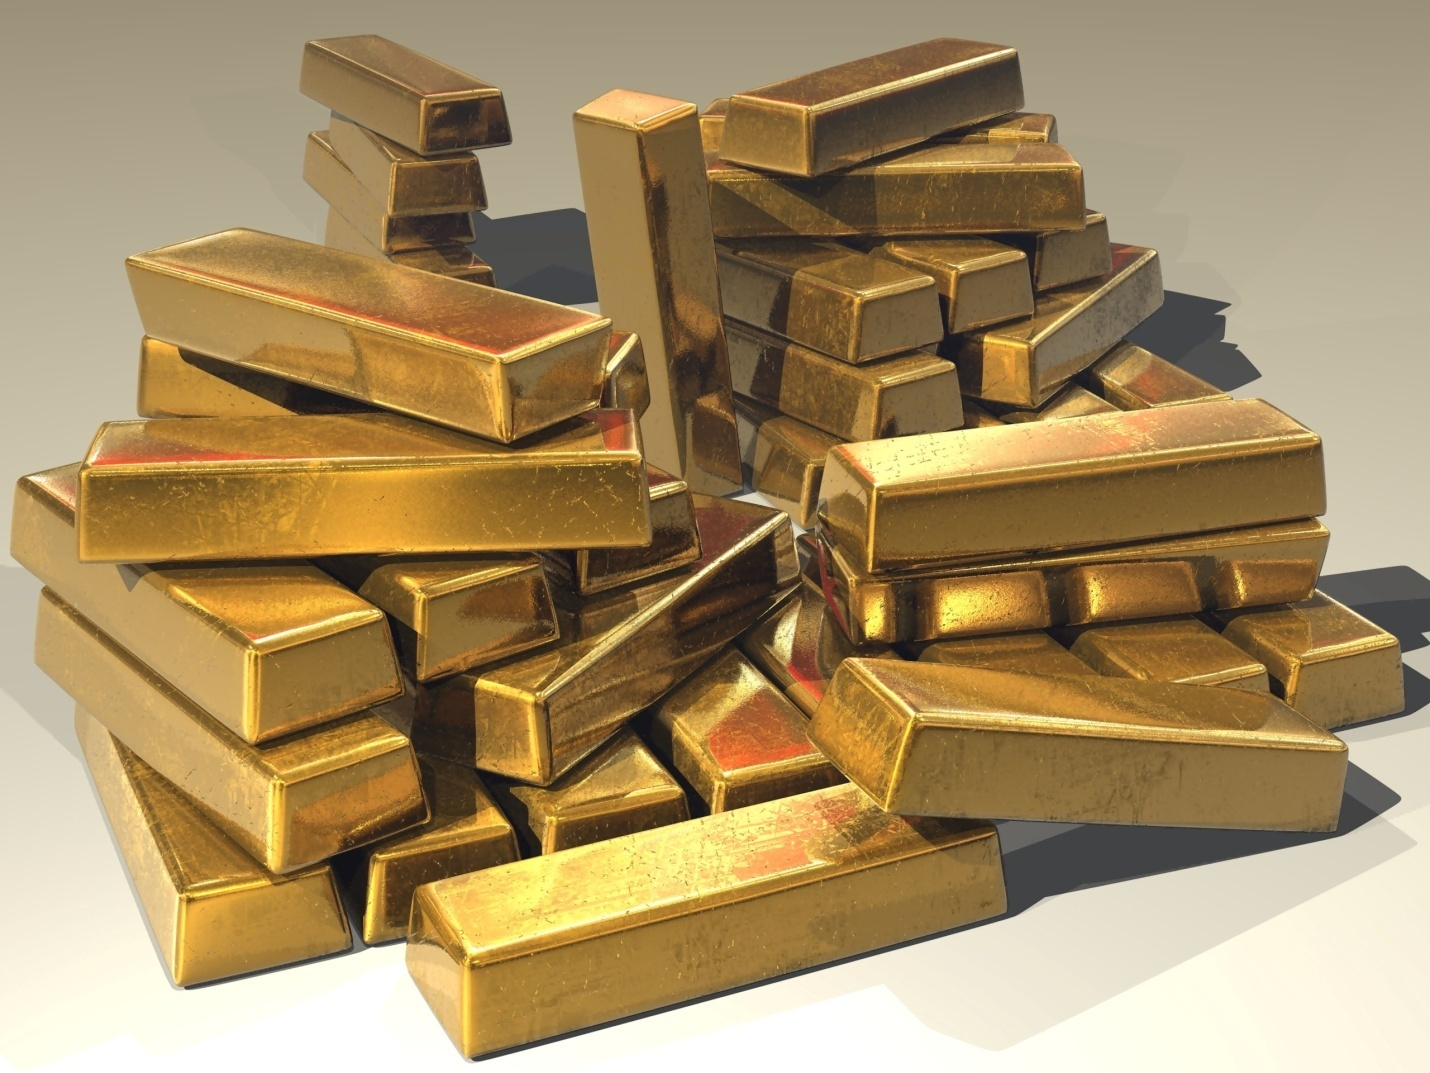 A stack of gold bullion ingots